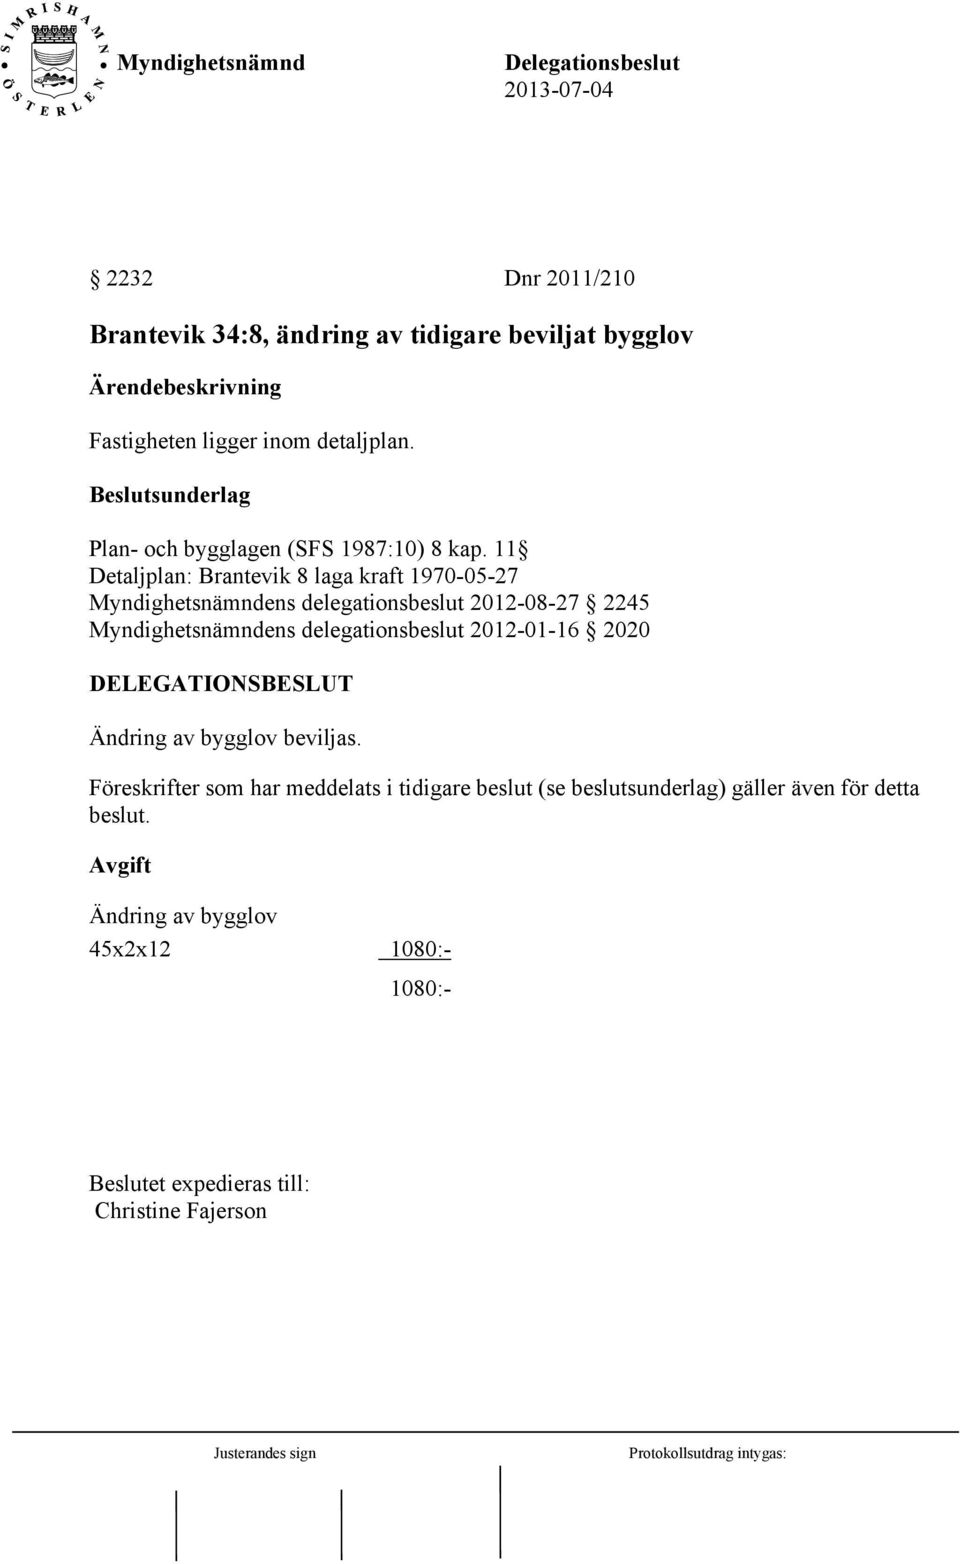 11 Detaljplan: Brantevik 8 laga kraft 1970-05-27 Myndighetsnämndens delegationsbeslut 2012-08-27 2245 Myndighetsnämndens delegationsbeslut